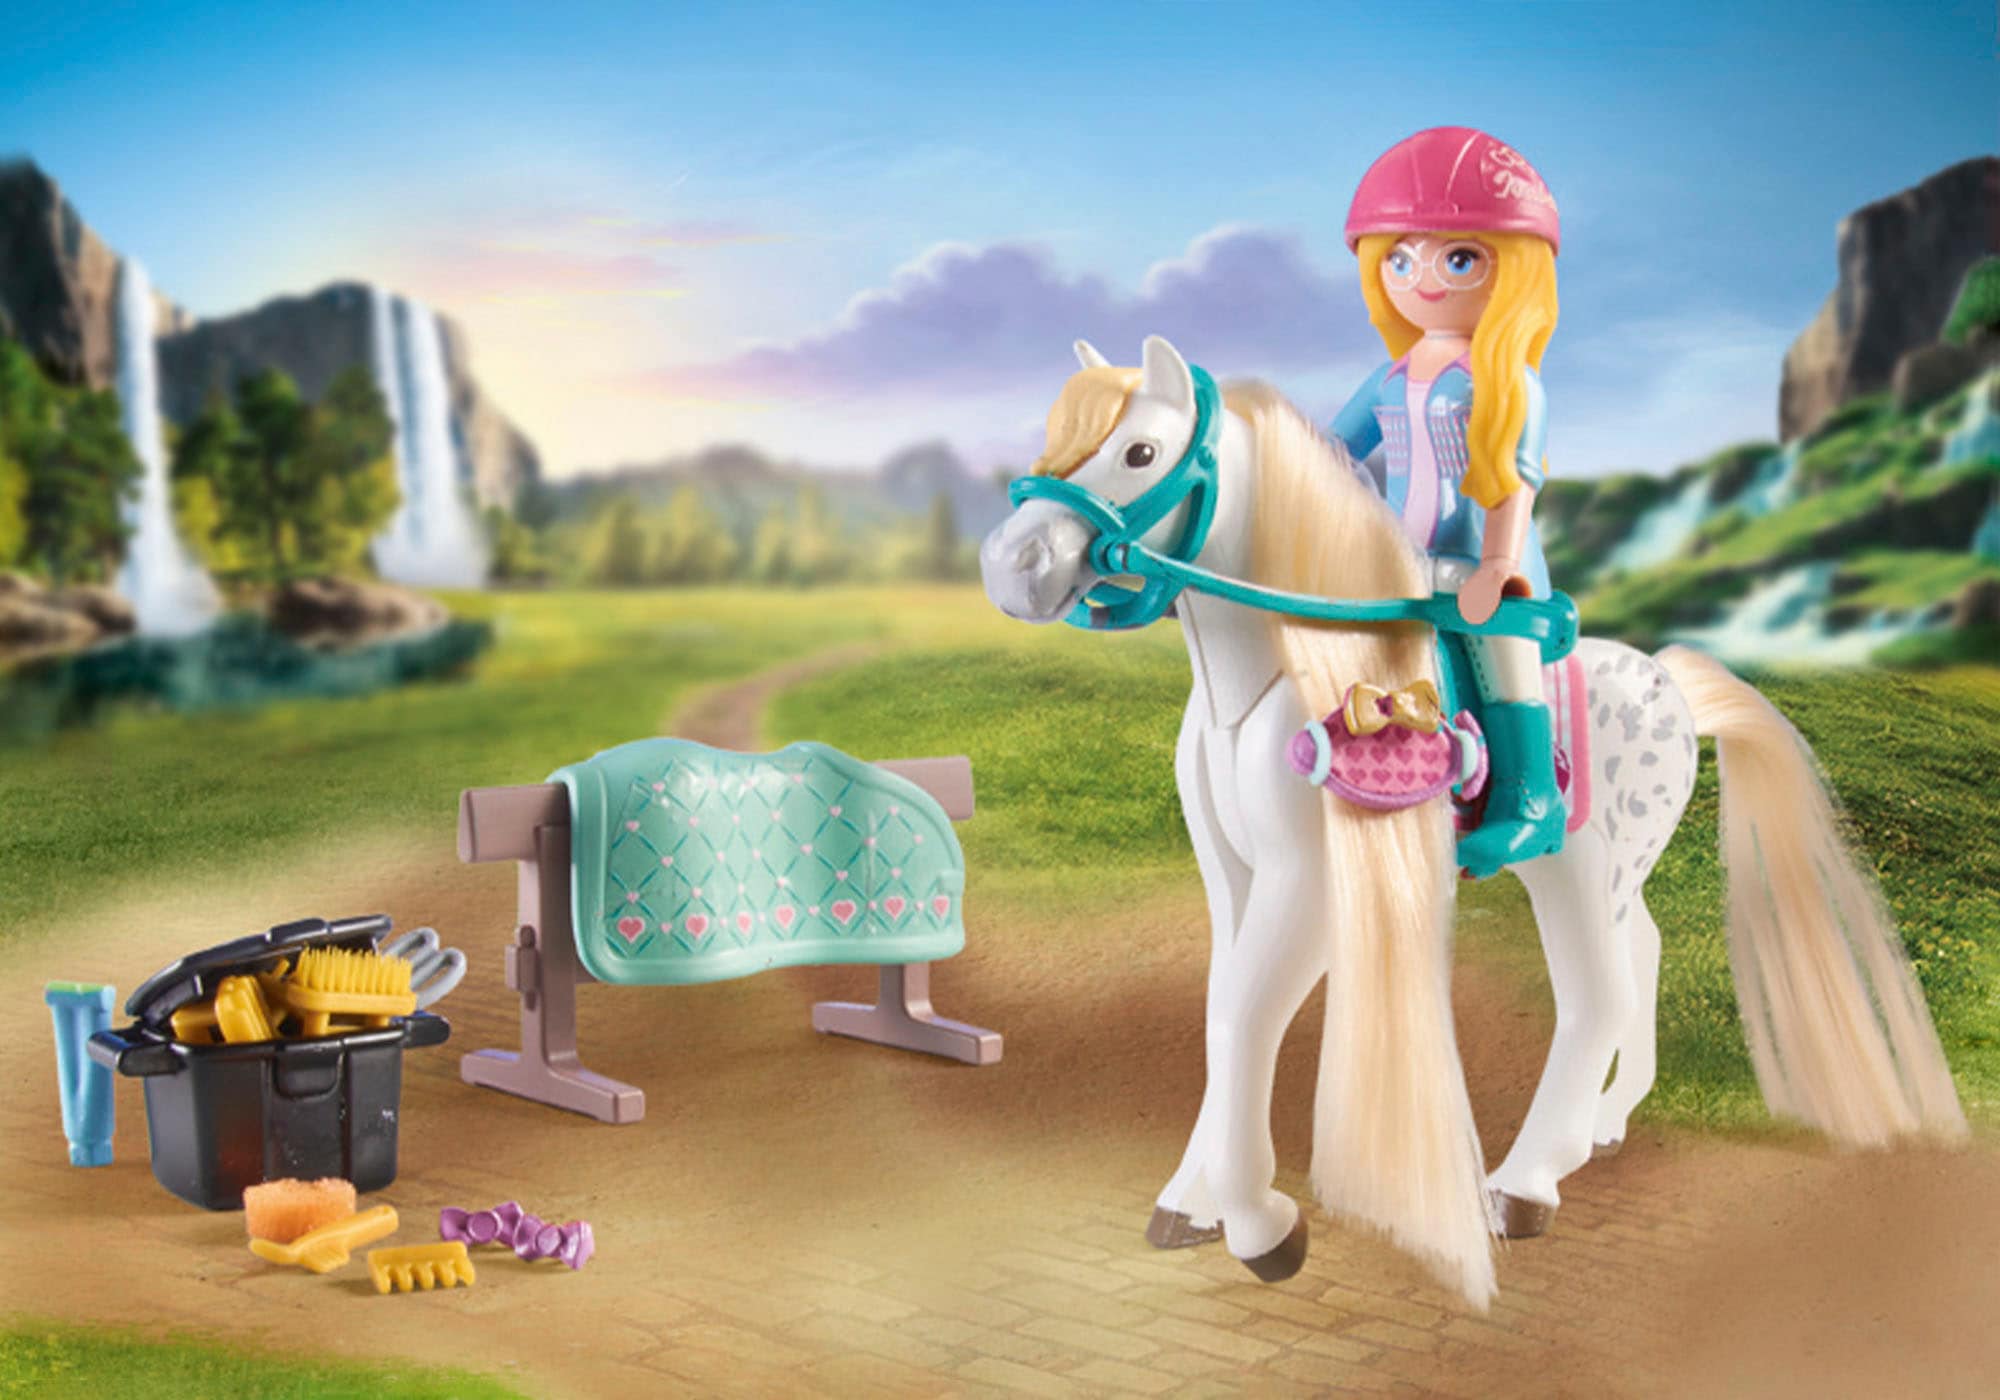 Playmobil® Konstruktions-Spielset »Isabella & Lioness mit Waschplatz (71354), Horses of Waterfall«, (86 St.), teilweise aus recyceltem Material